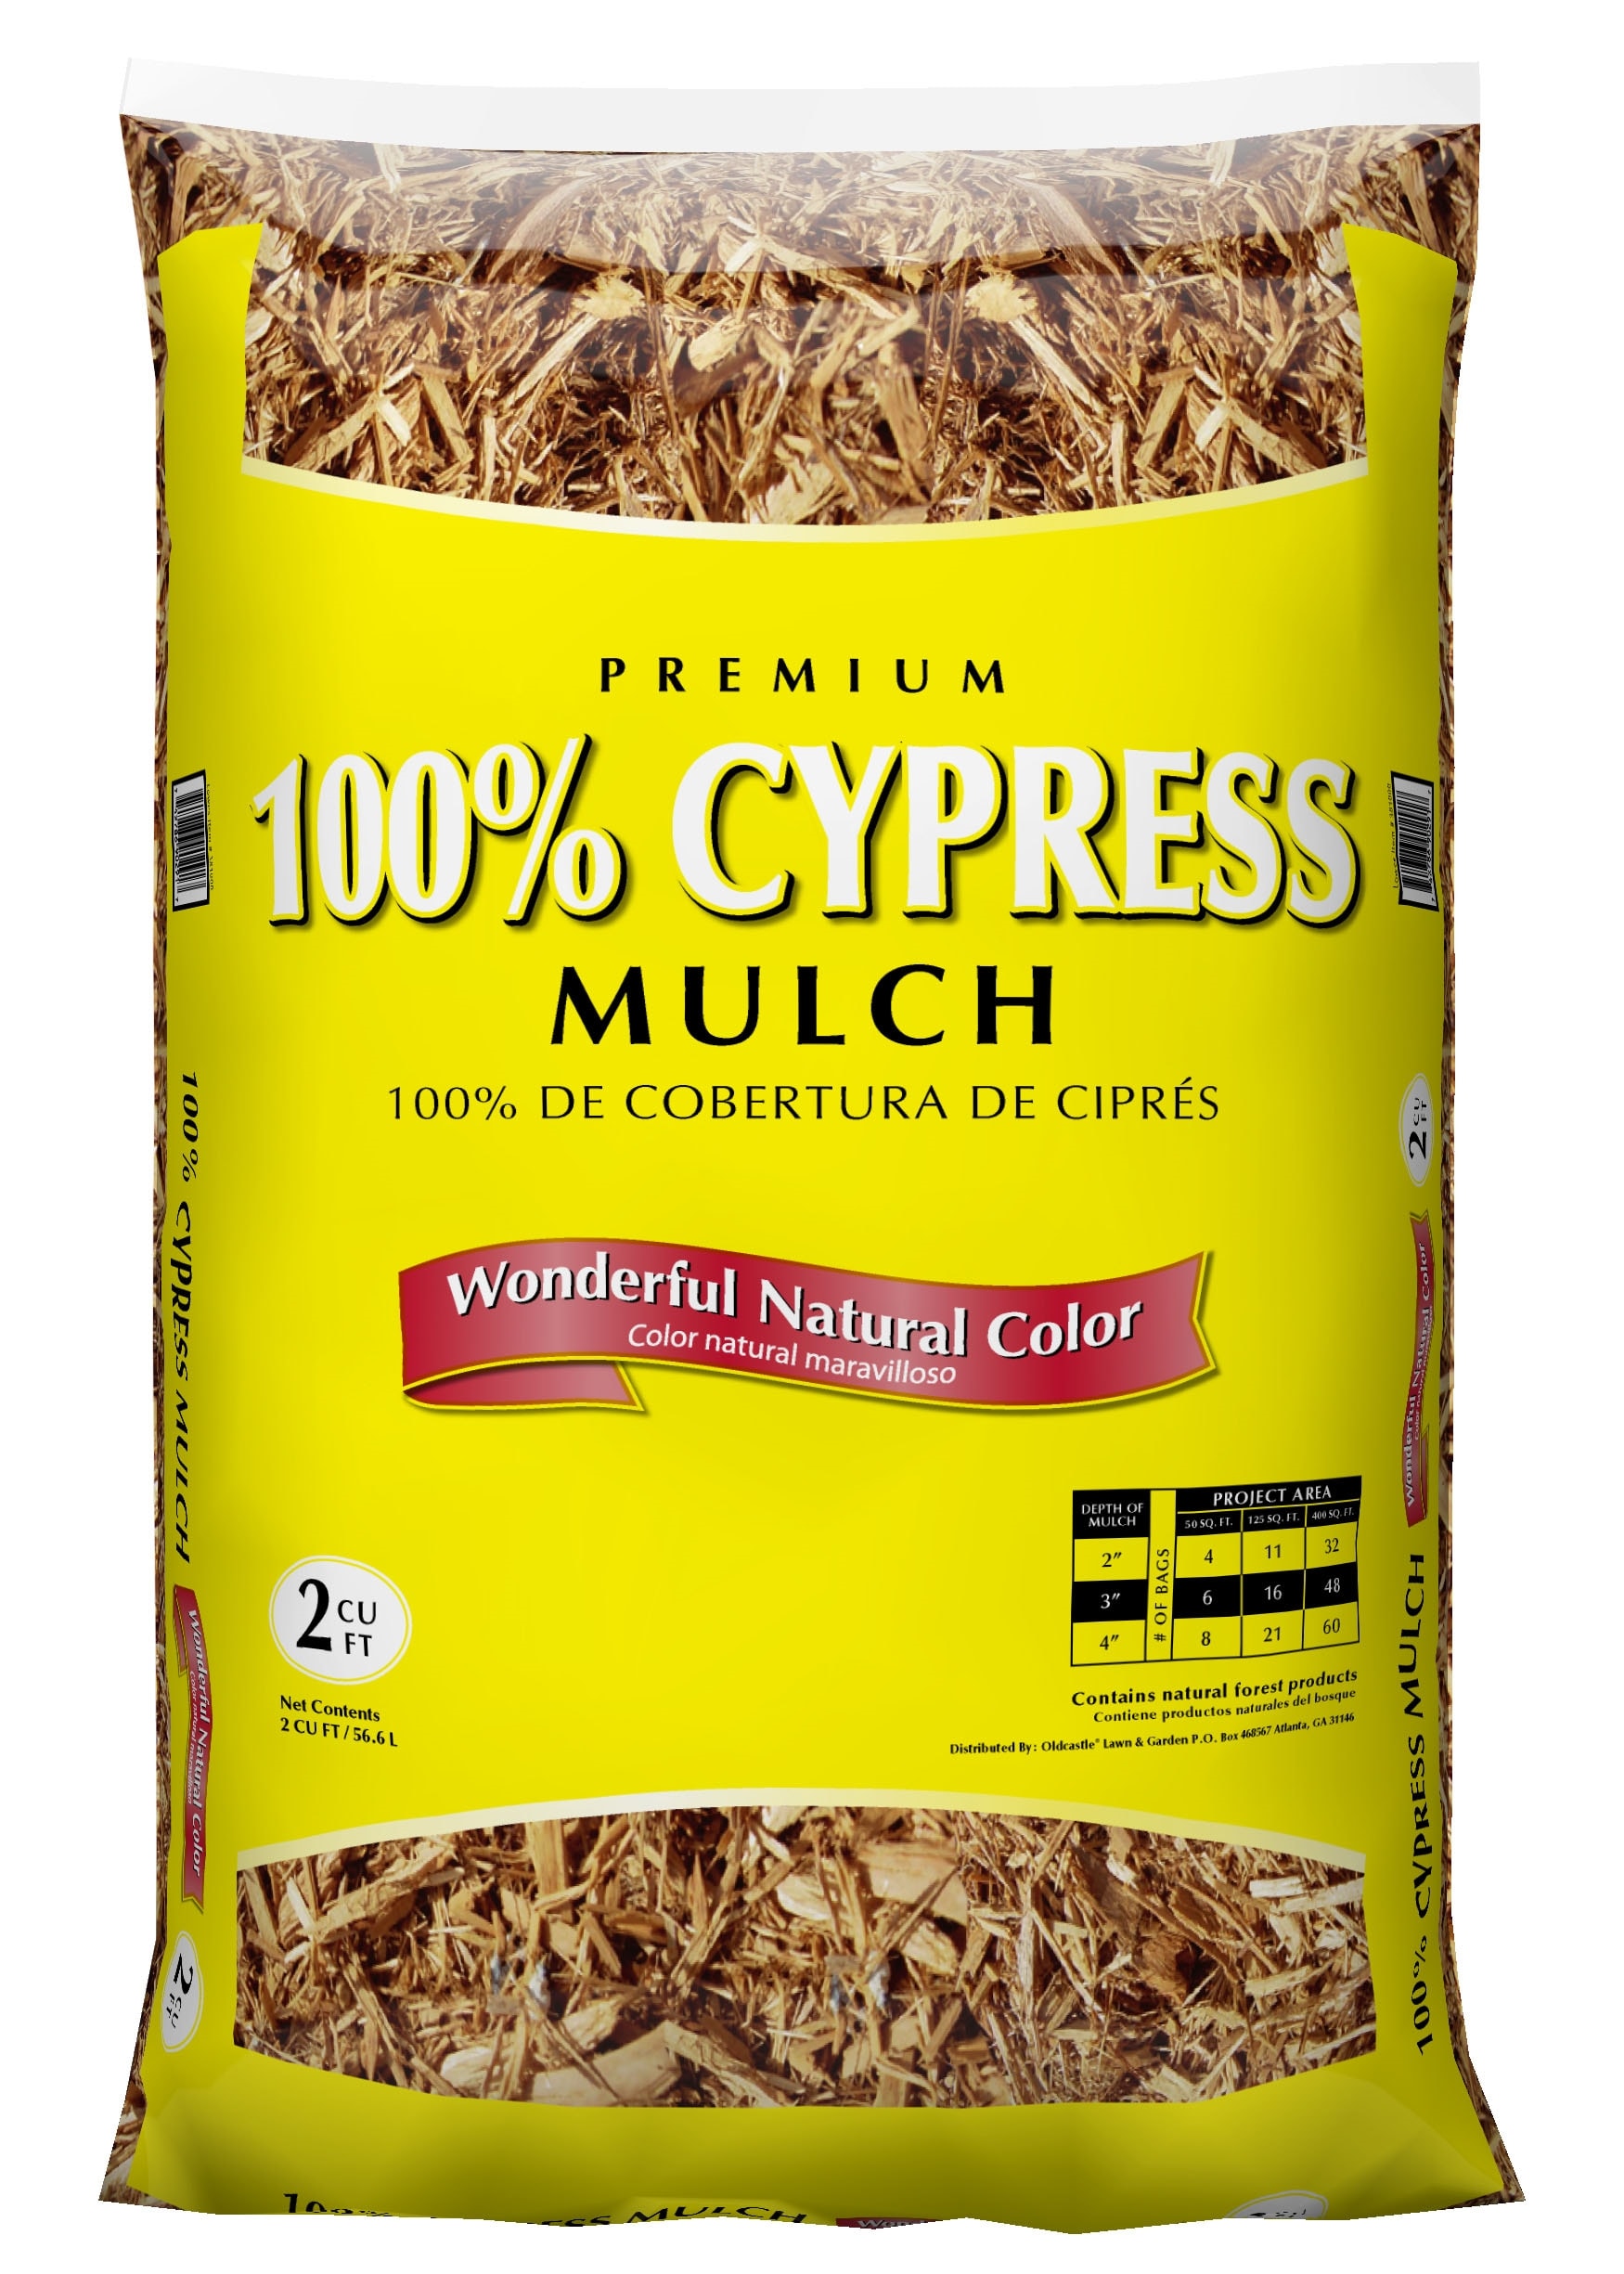 100 cypress Mulch at